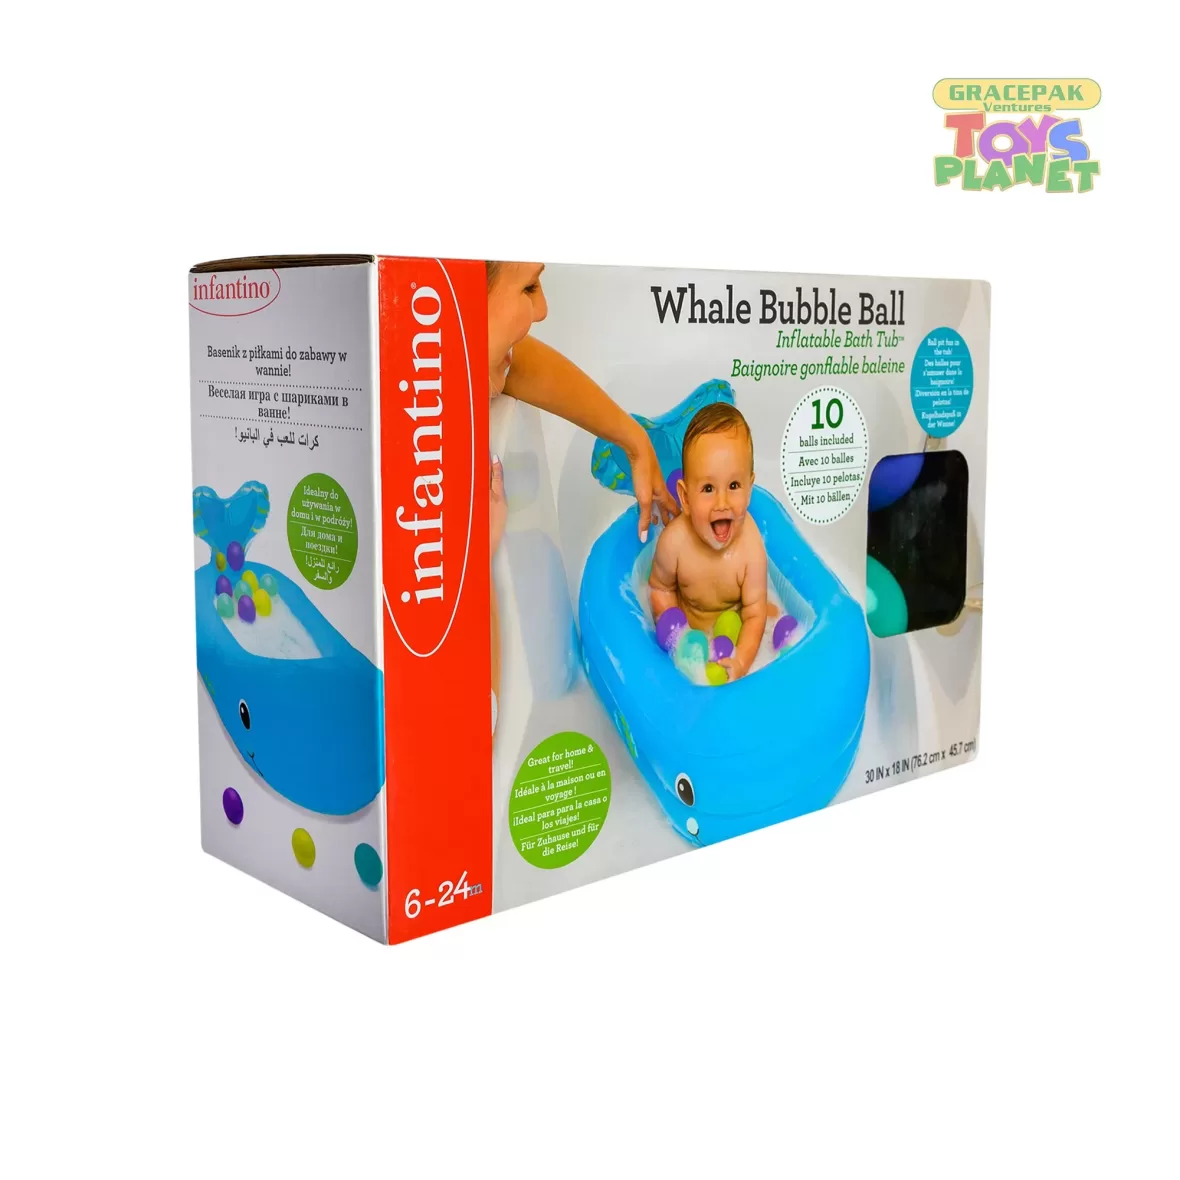 Infantino_Whale Bubble Ball Inflatable Bath Tub_2